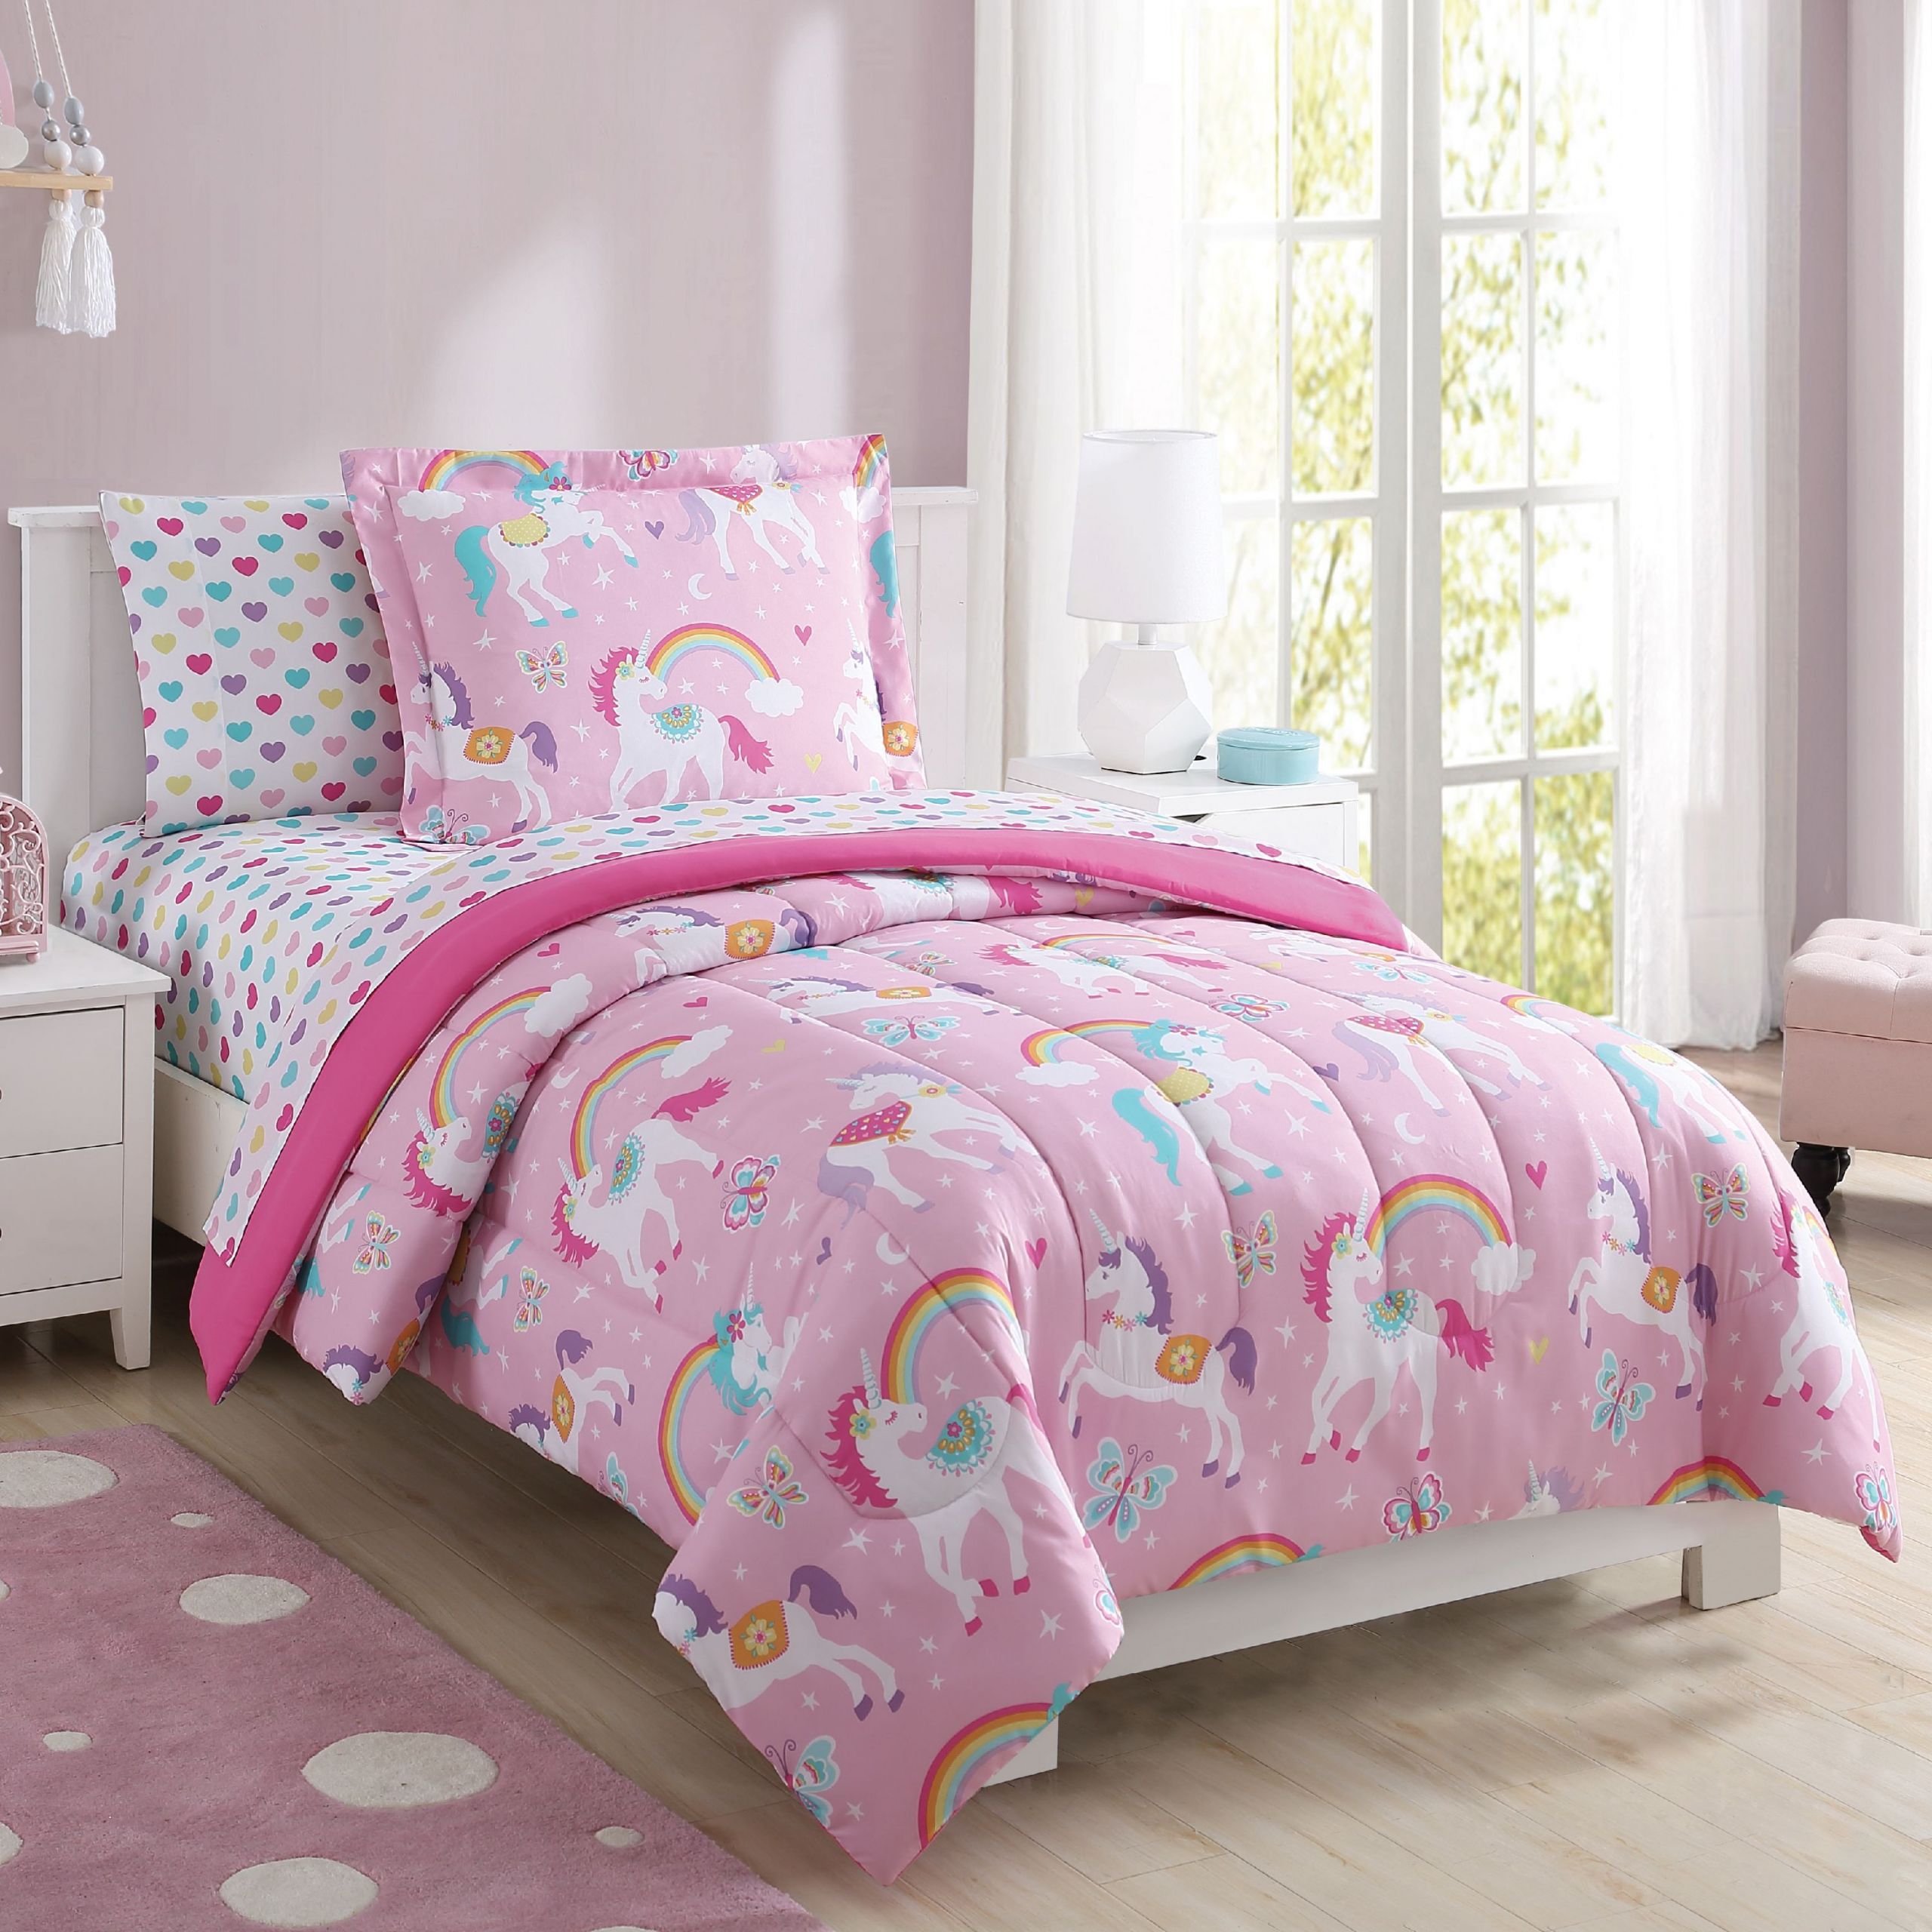 Walmart Kids Bedroom Sets
 Mainstays Kids Rainbow Unicorn Bed in a Bag plete